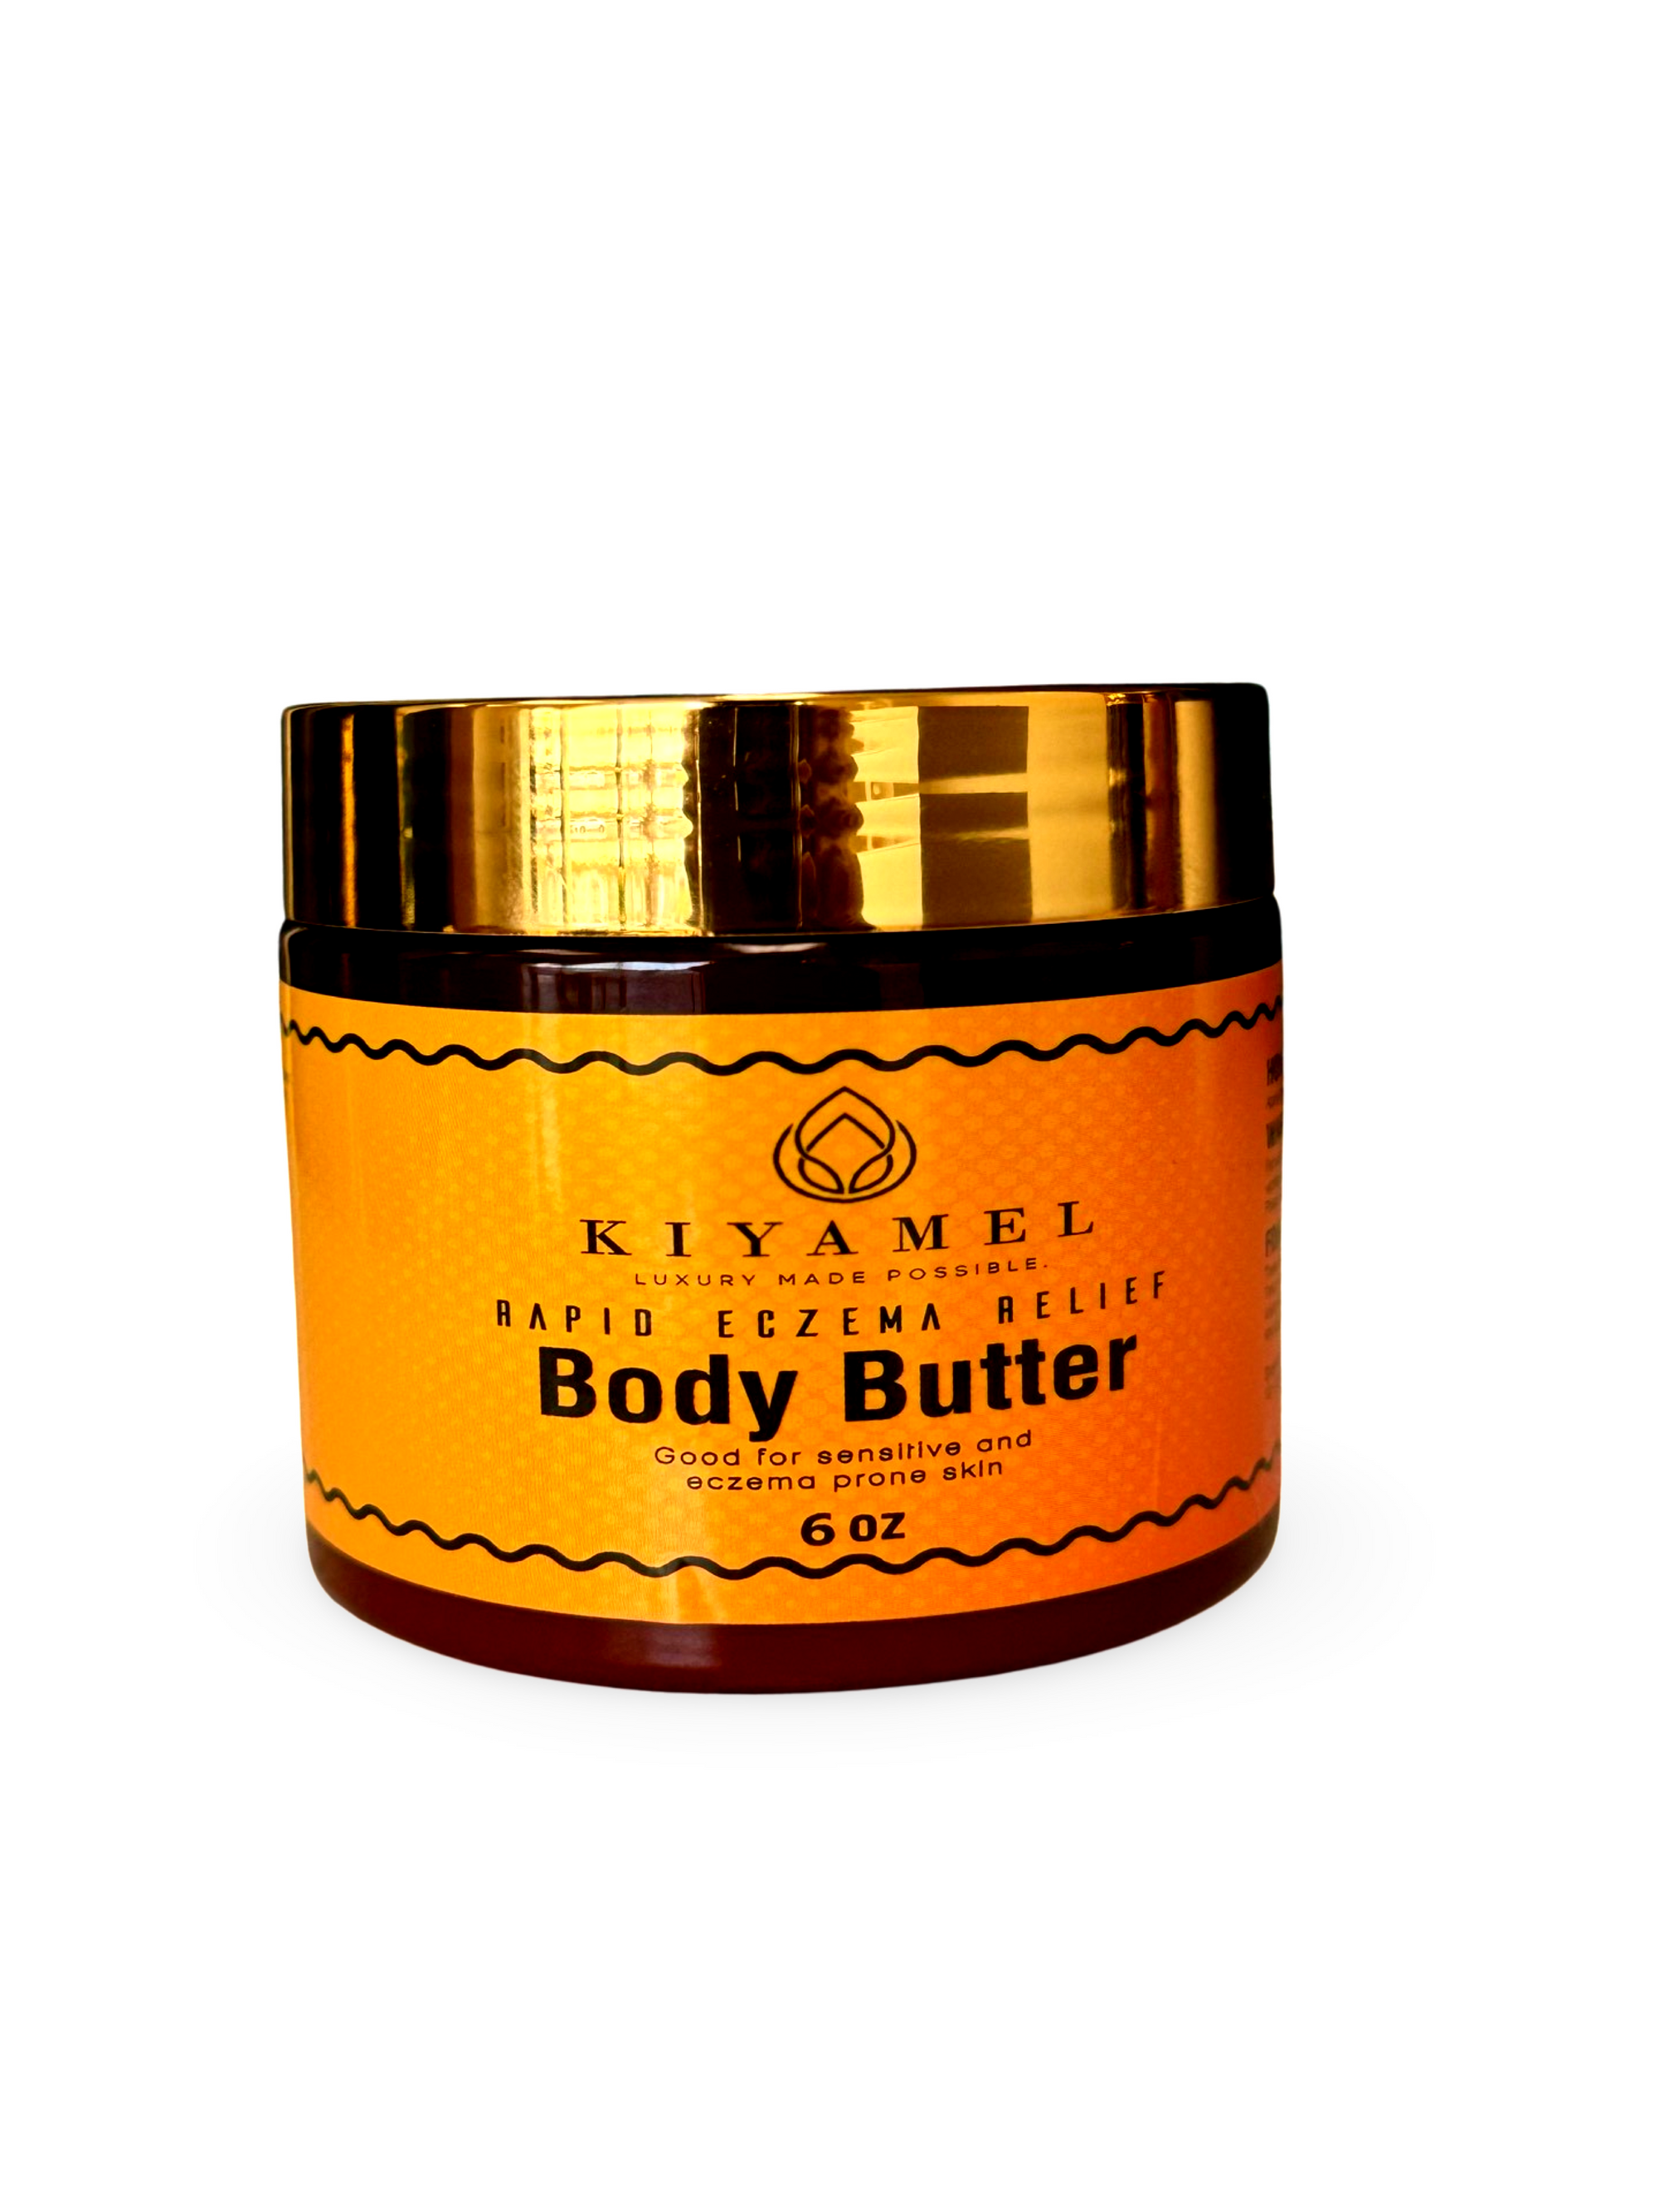 Rapid Eczema Relief Body Butter